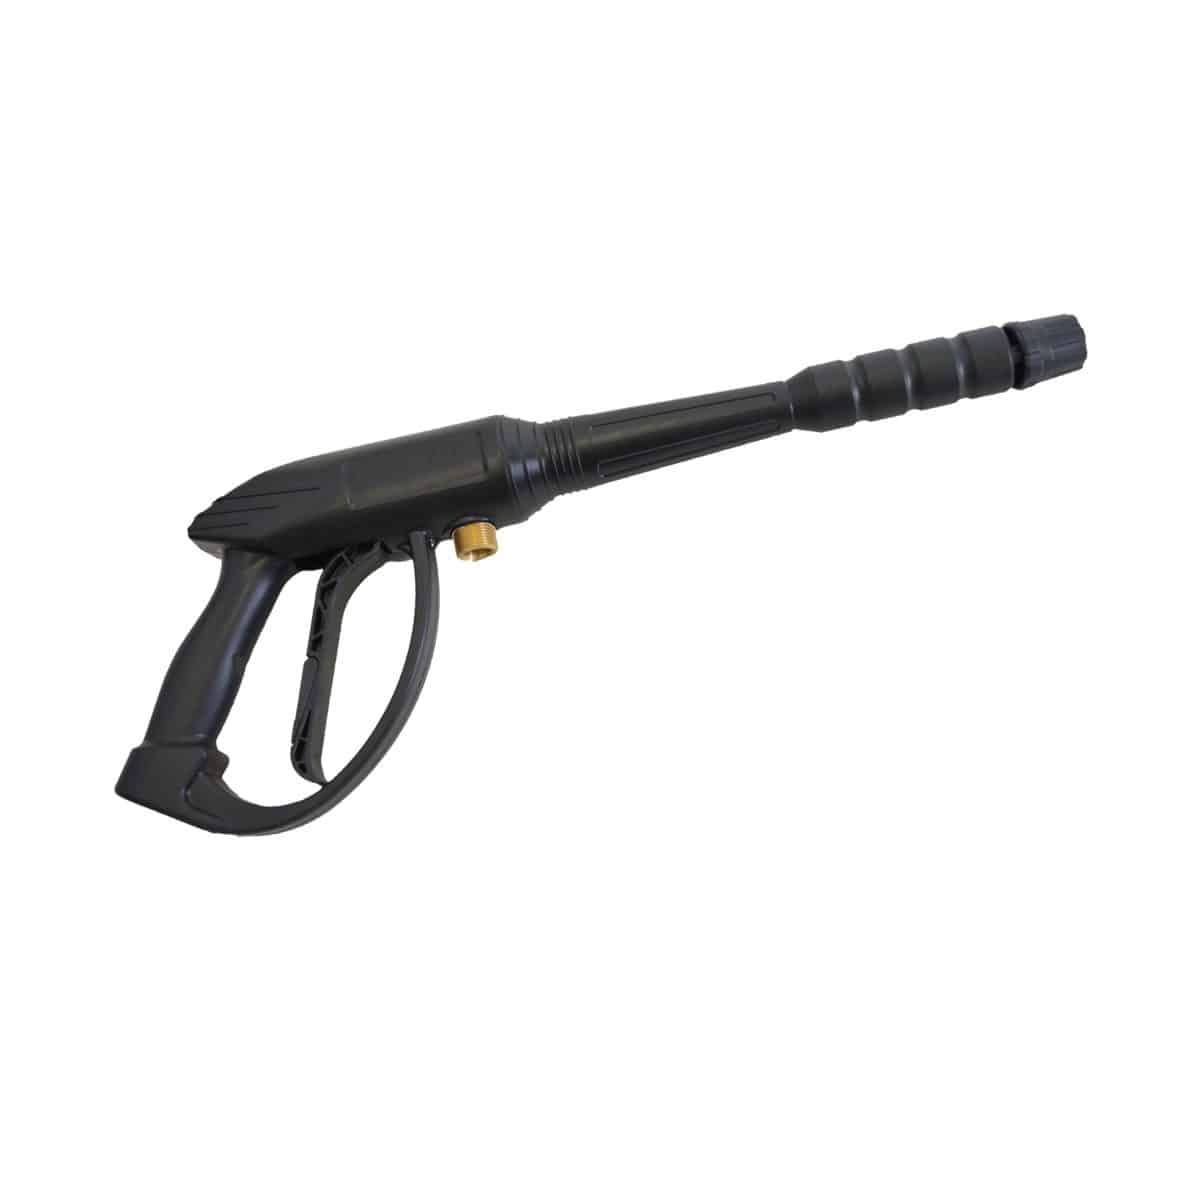 Simpson Spray Gun with M22 Hose Connection